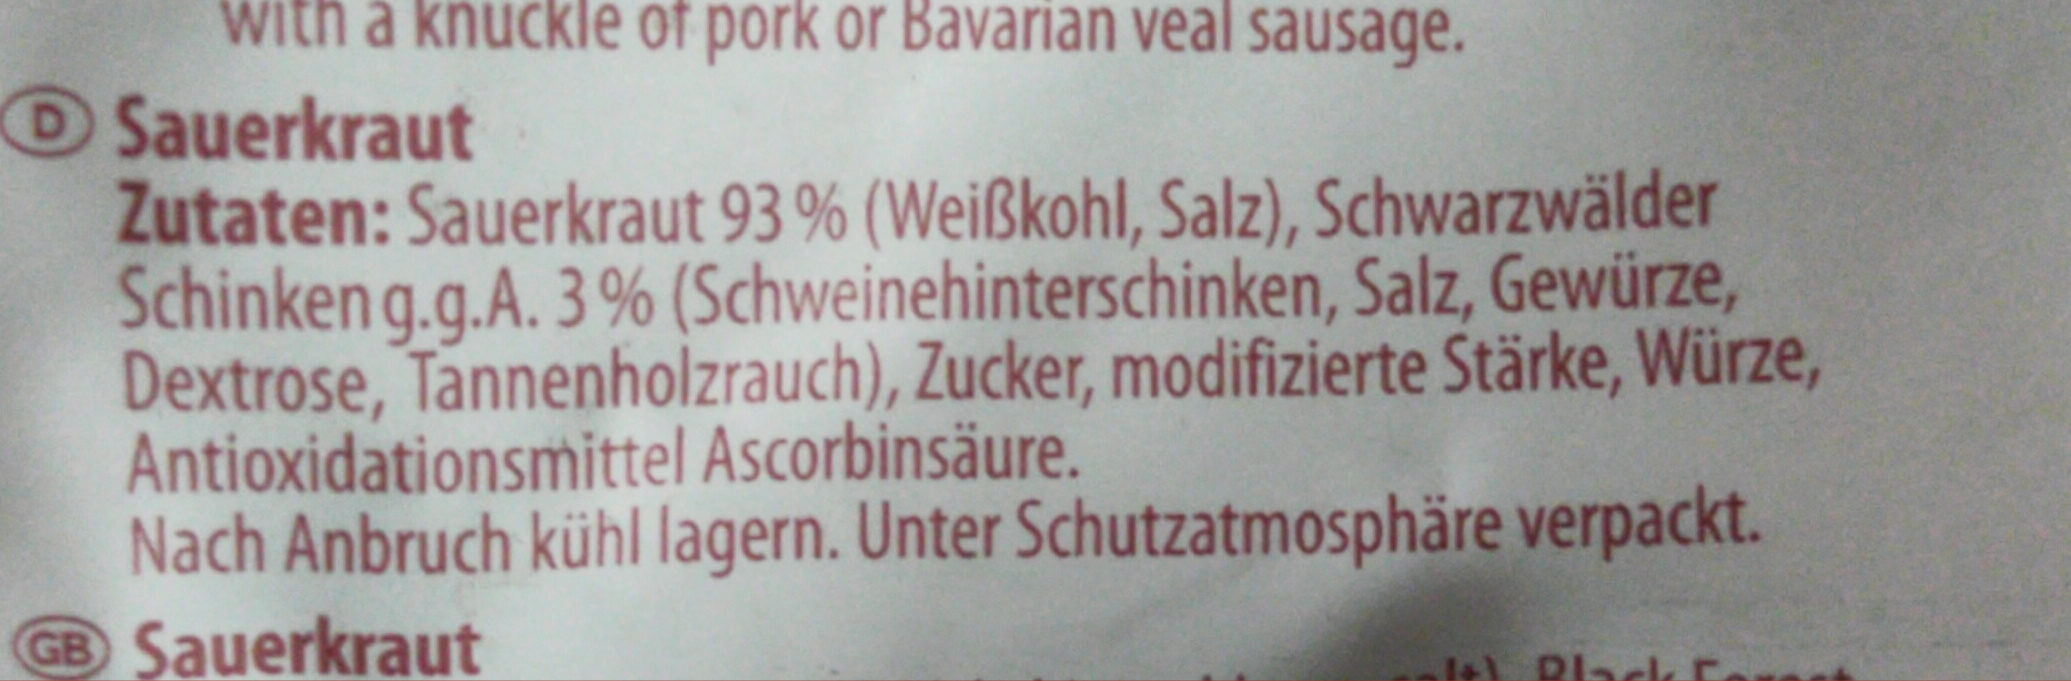 Sauerkraut 2 min. - Zutaten